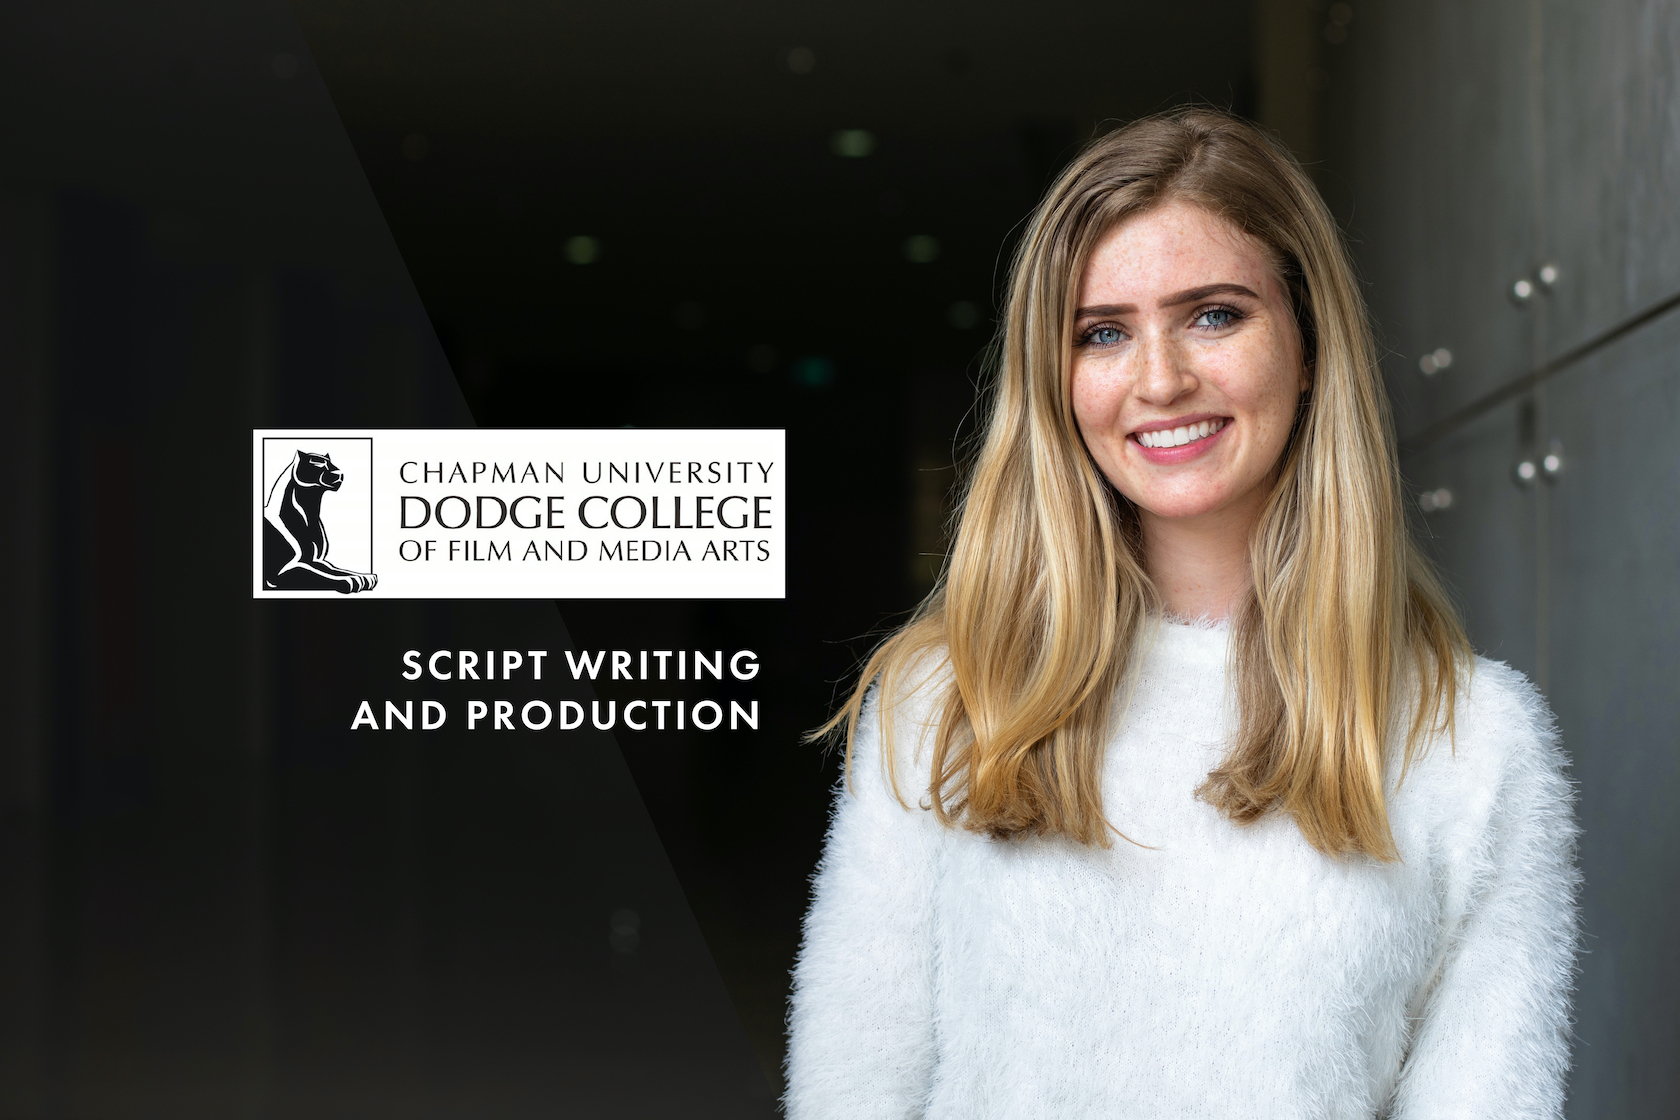 University Offers: Charlotte Masson, Dodge College of Film and Media Arts, Chapman University